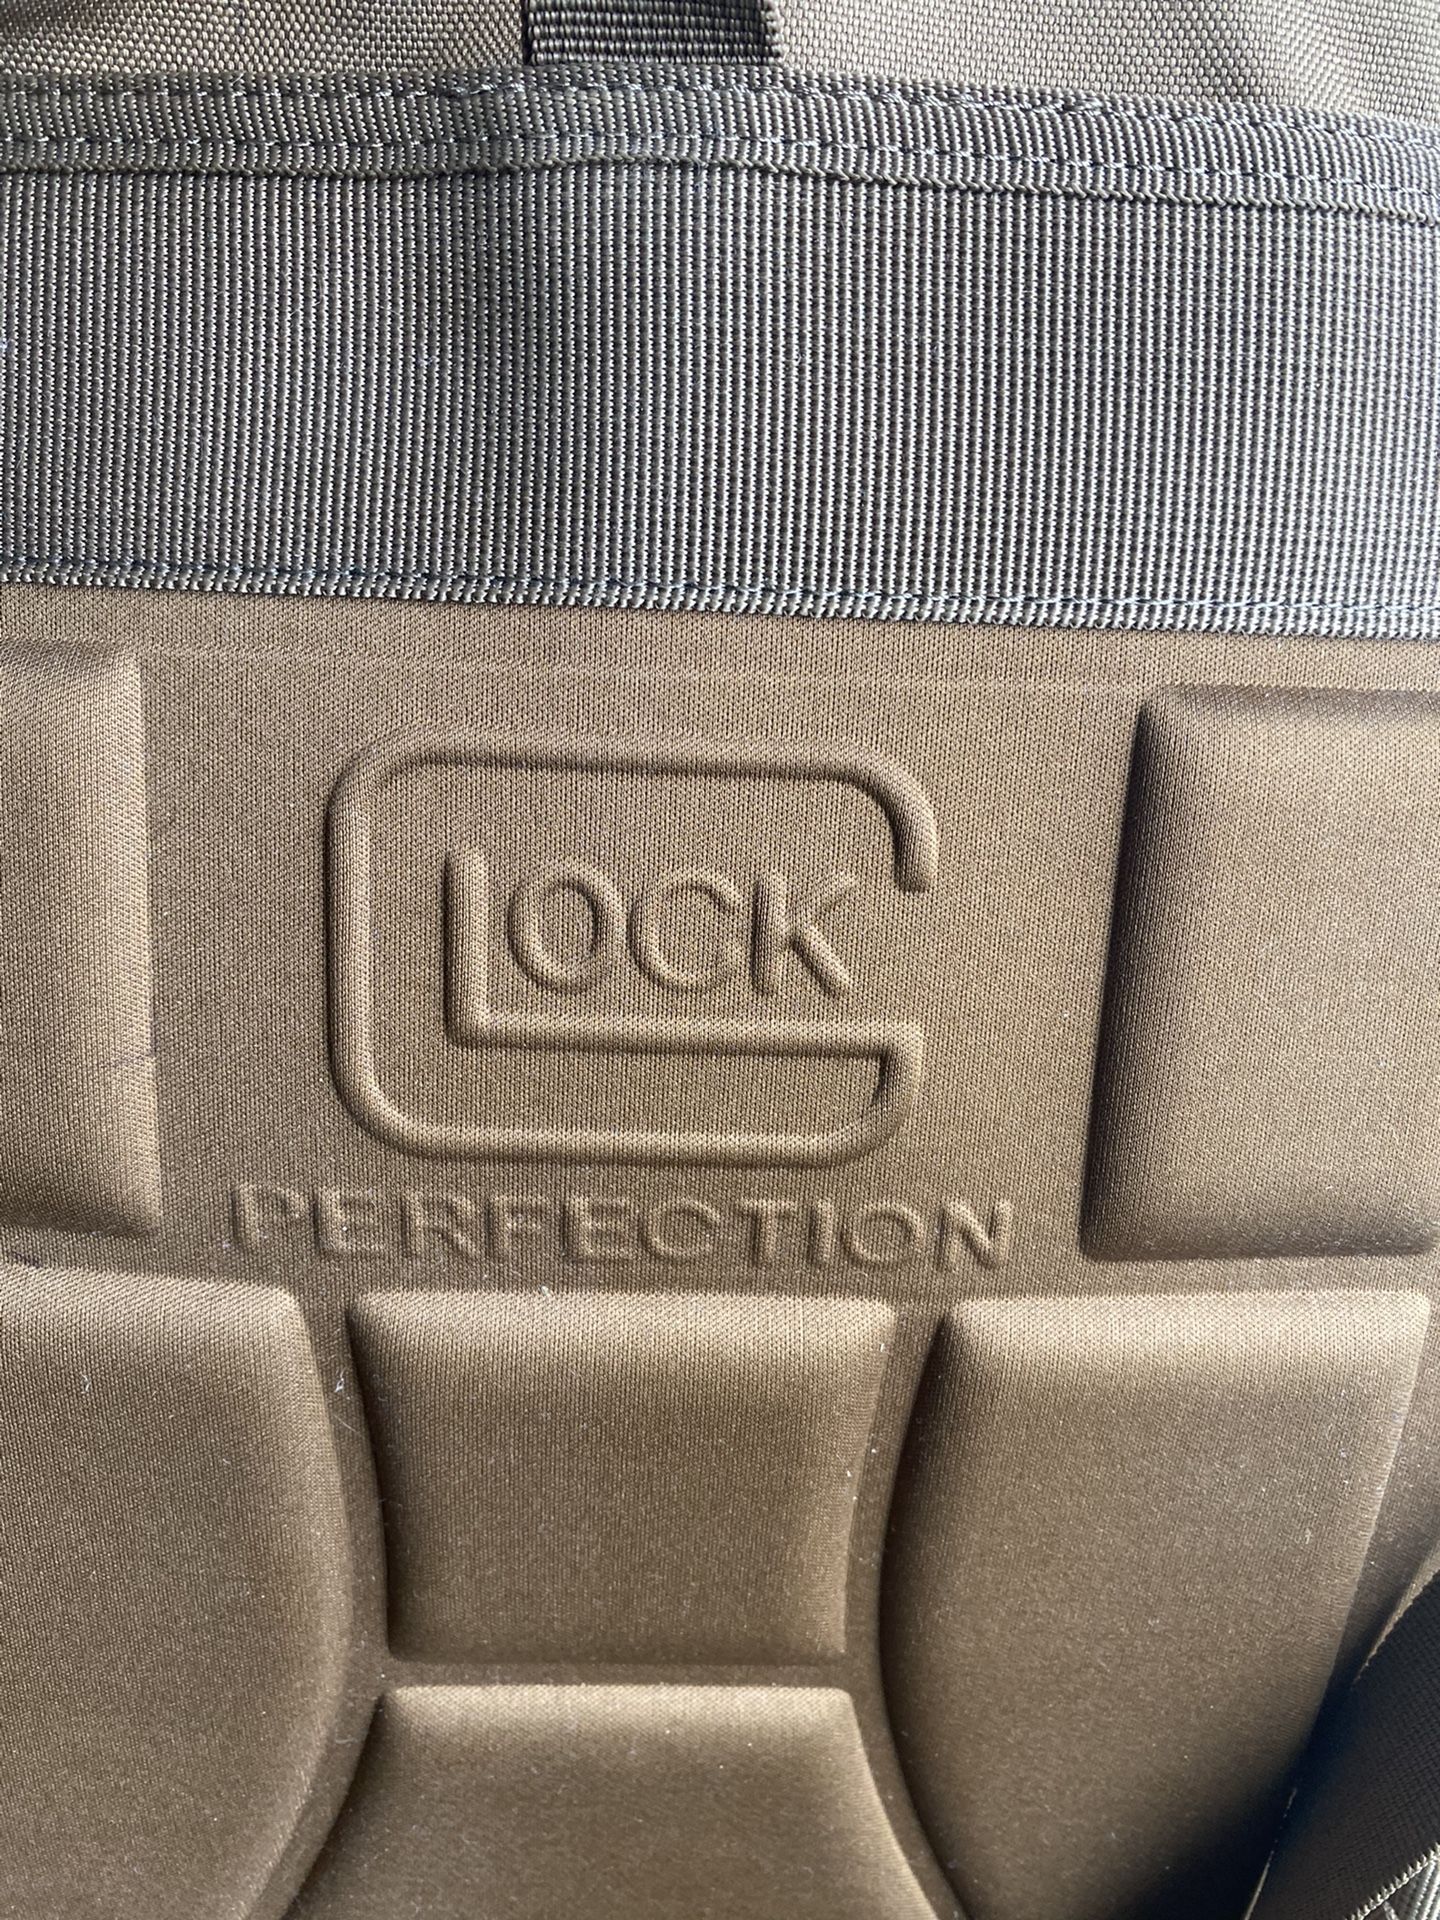 Glock Tactical Backpack